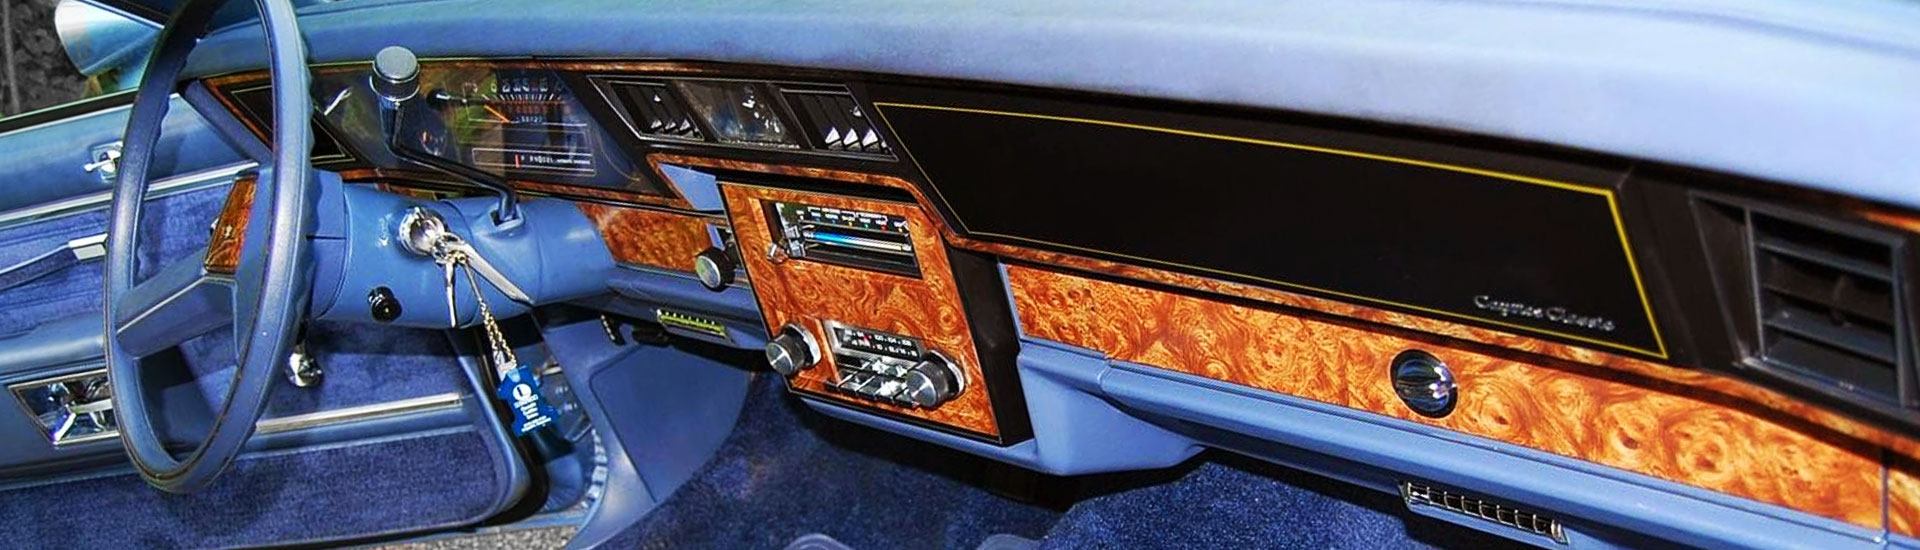 1984 Chevrolet Caprice Dash Kits